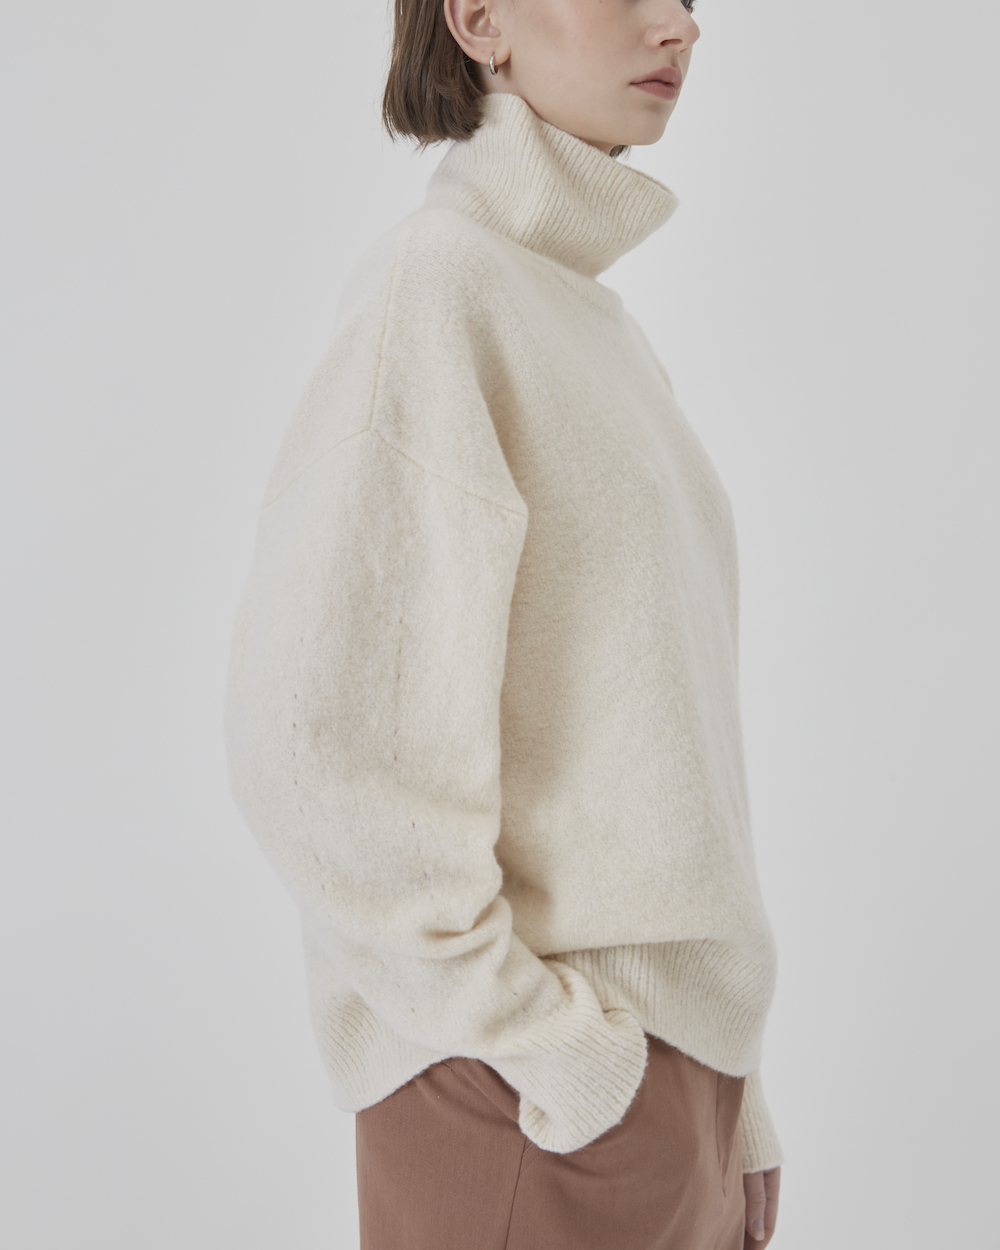 diarte-bennett-cashmere-blend-sweater-in-ivory